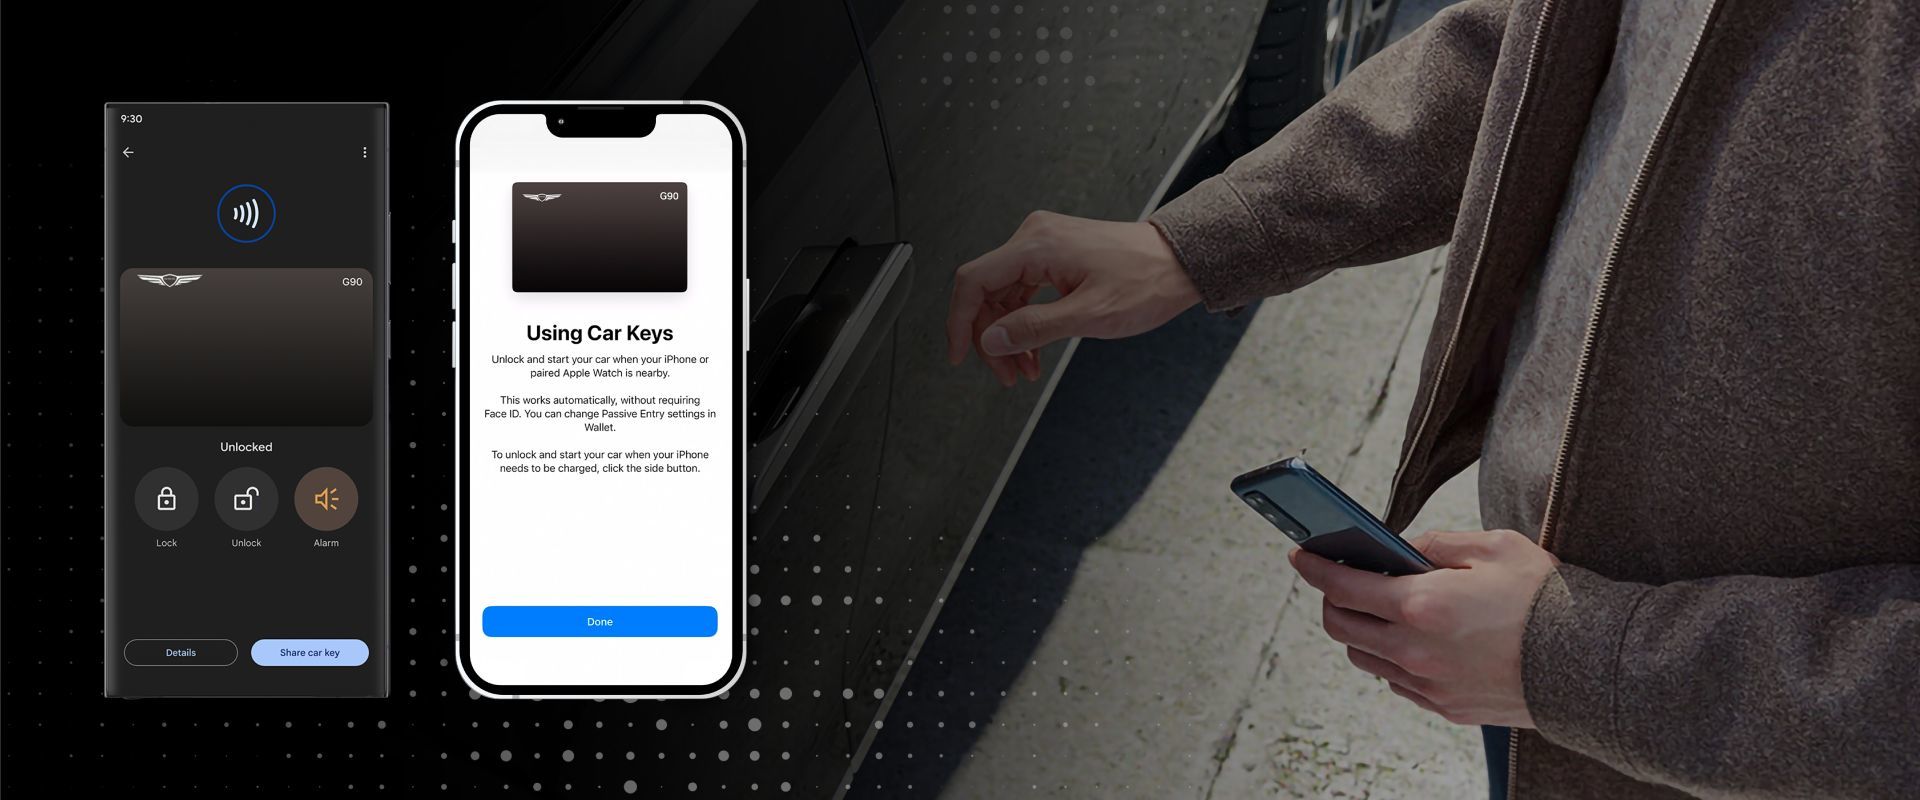 HMG Unlocks Digital Key 2 Convenience Feature for More Hyundai Kia and Genesis Users